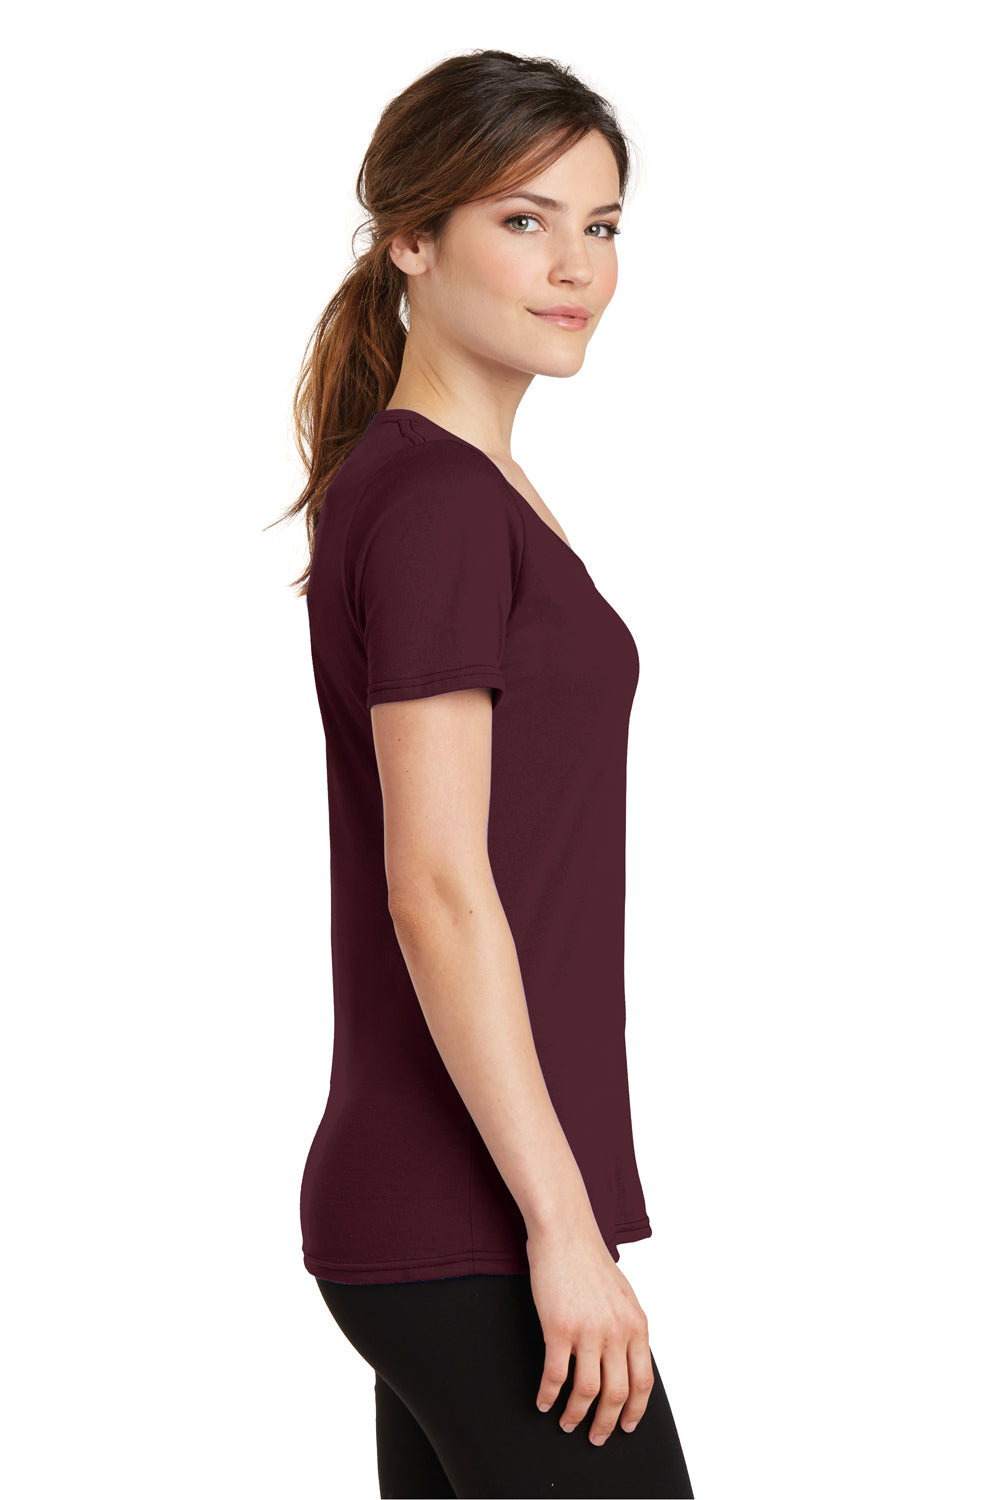 Port & Company LPC381V Womens Dry Zone Performance Moisture Wicking Short Sleeve V-Neck T-Shirt Maroon Side